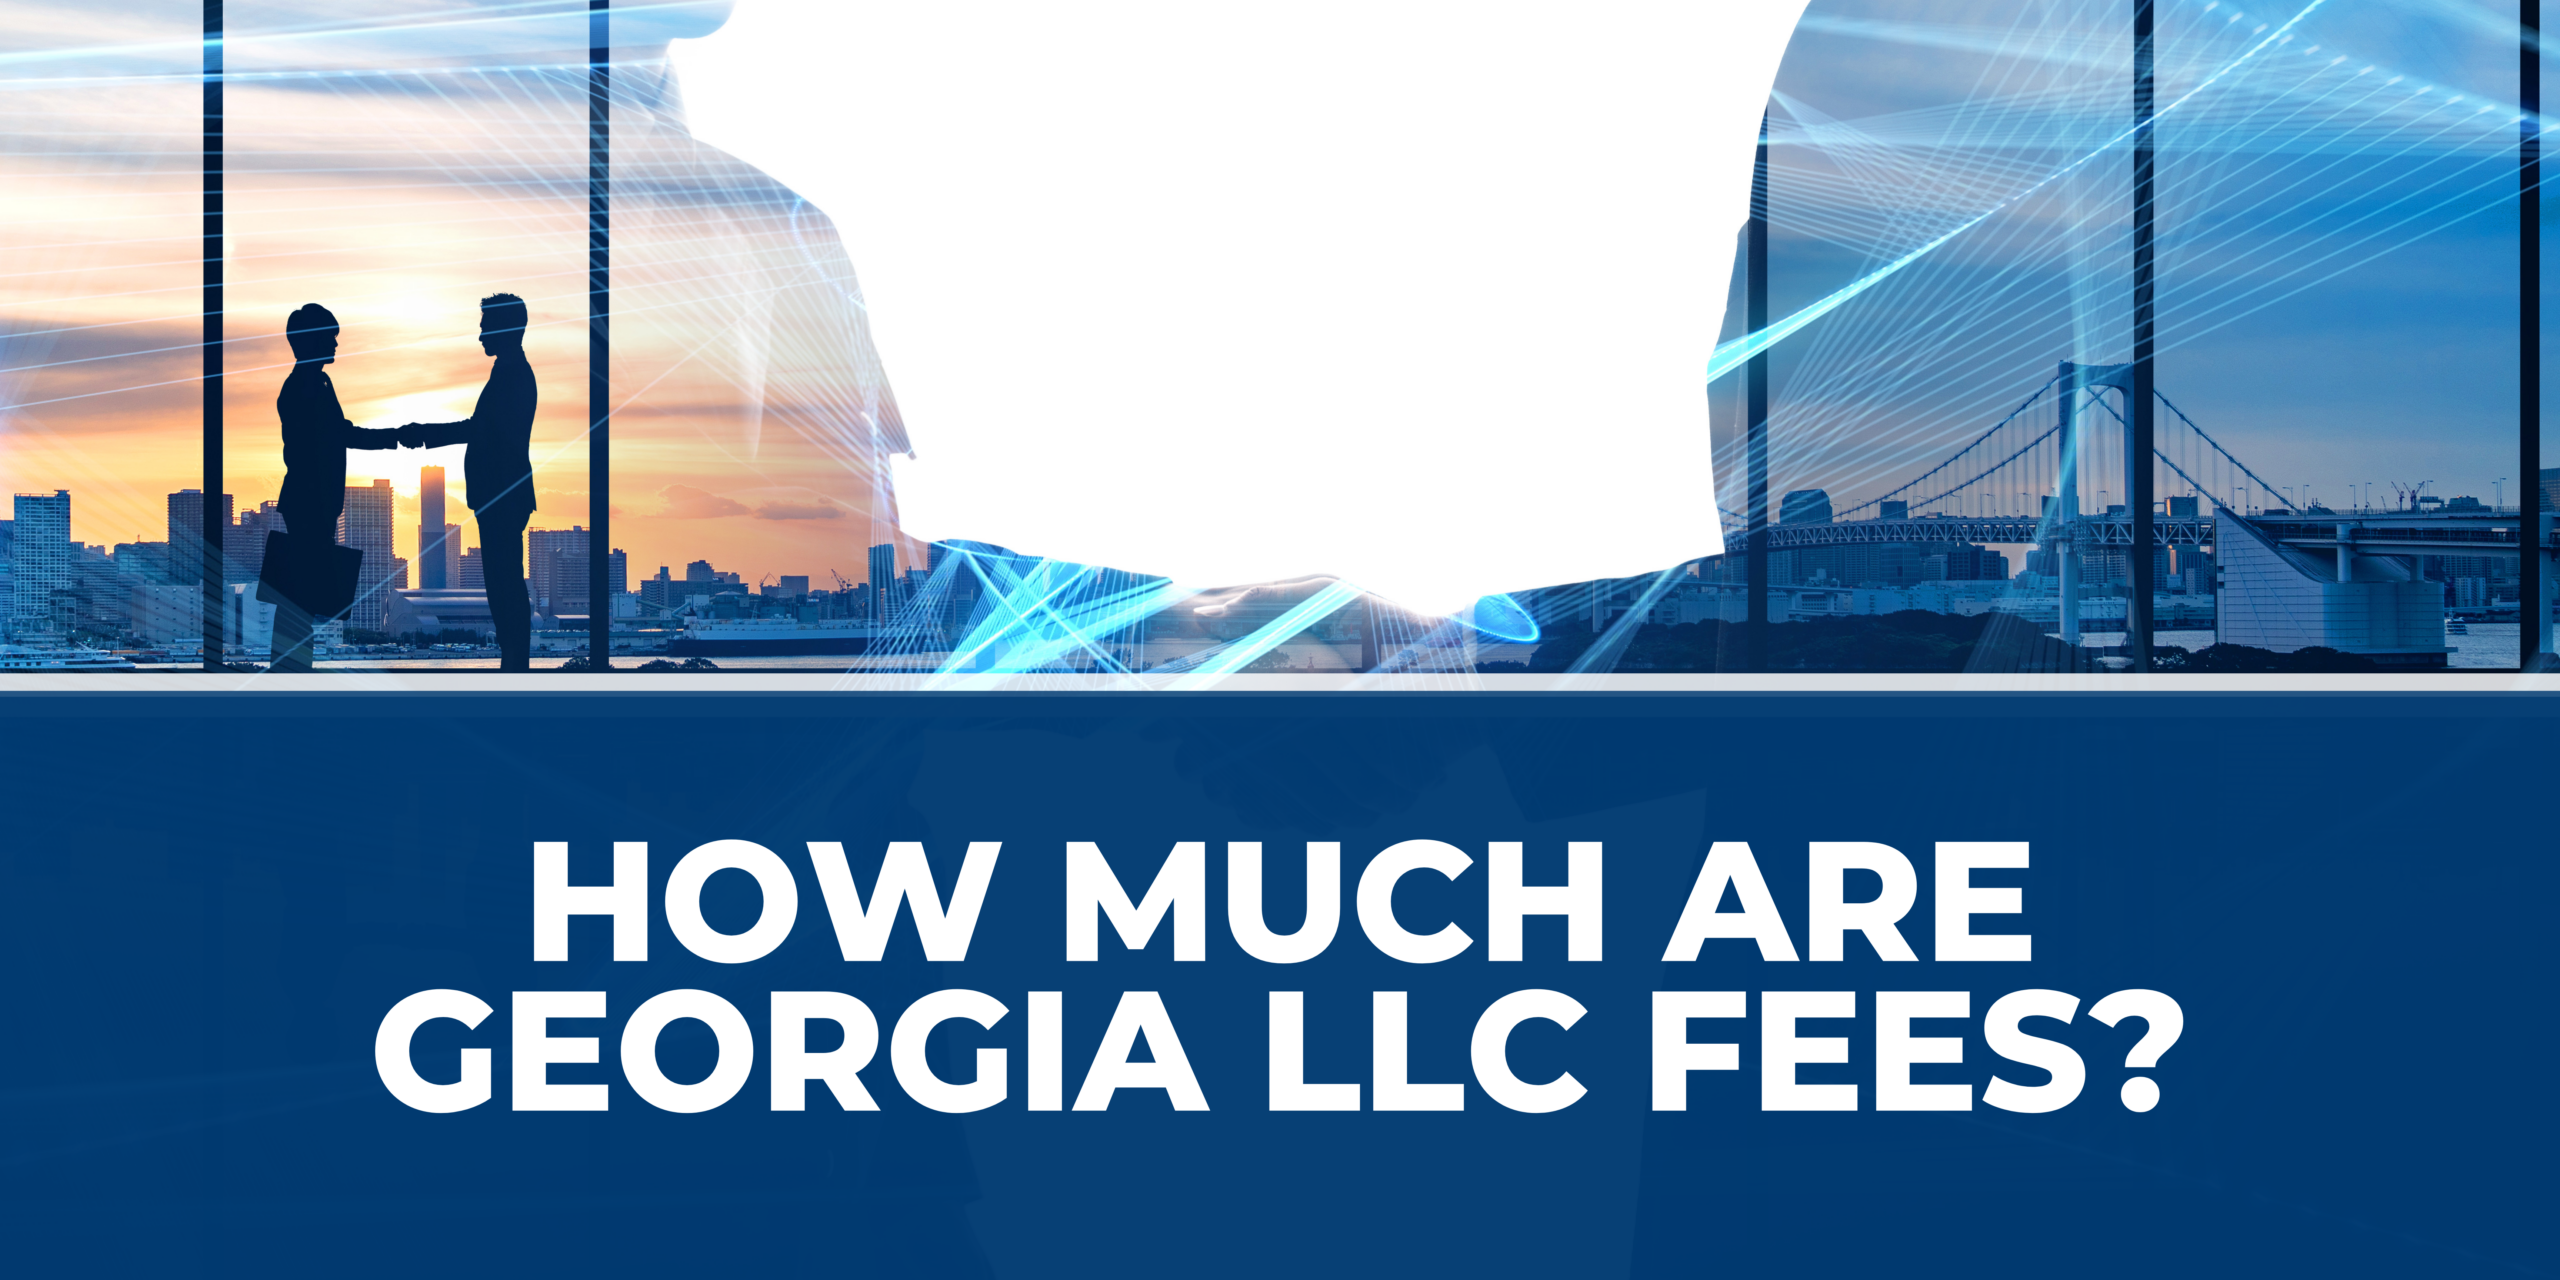 How Much Are Georgia LLC Fees?